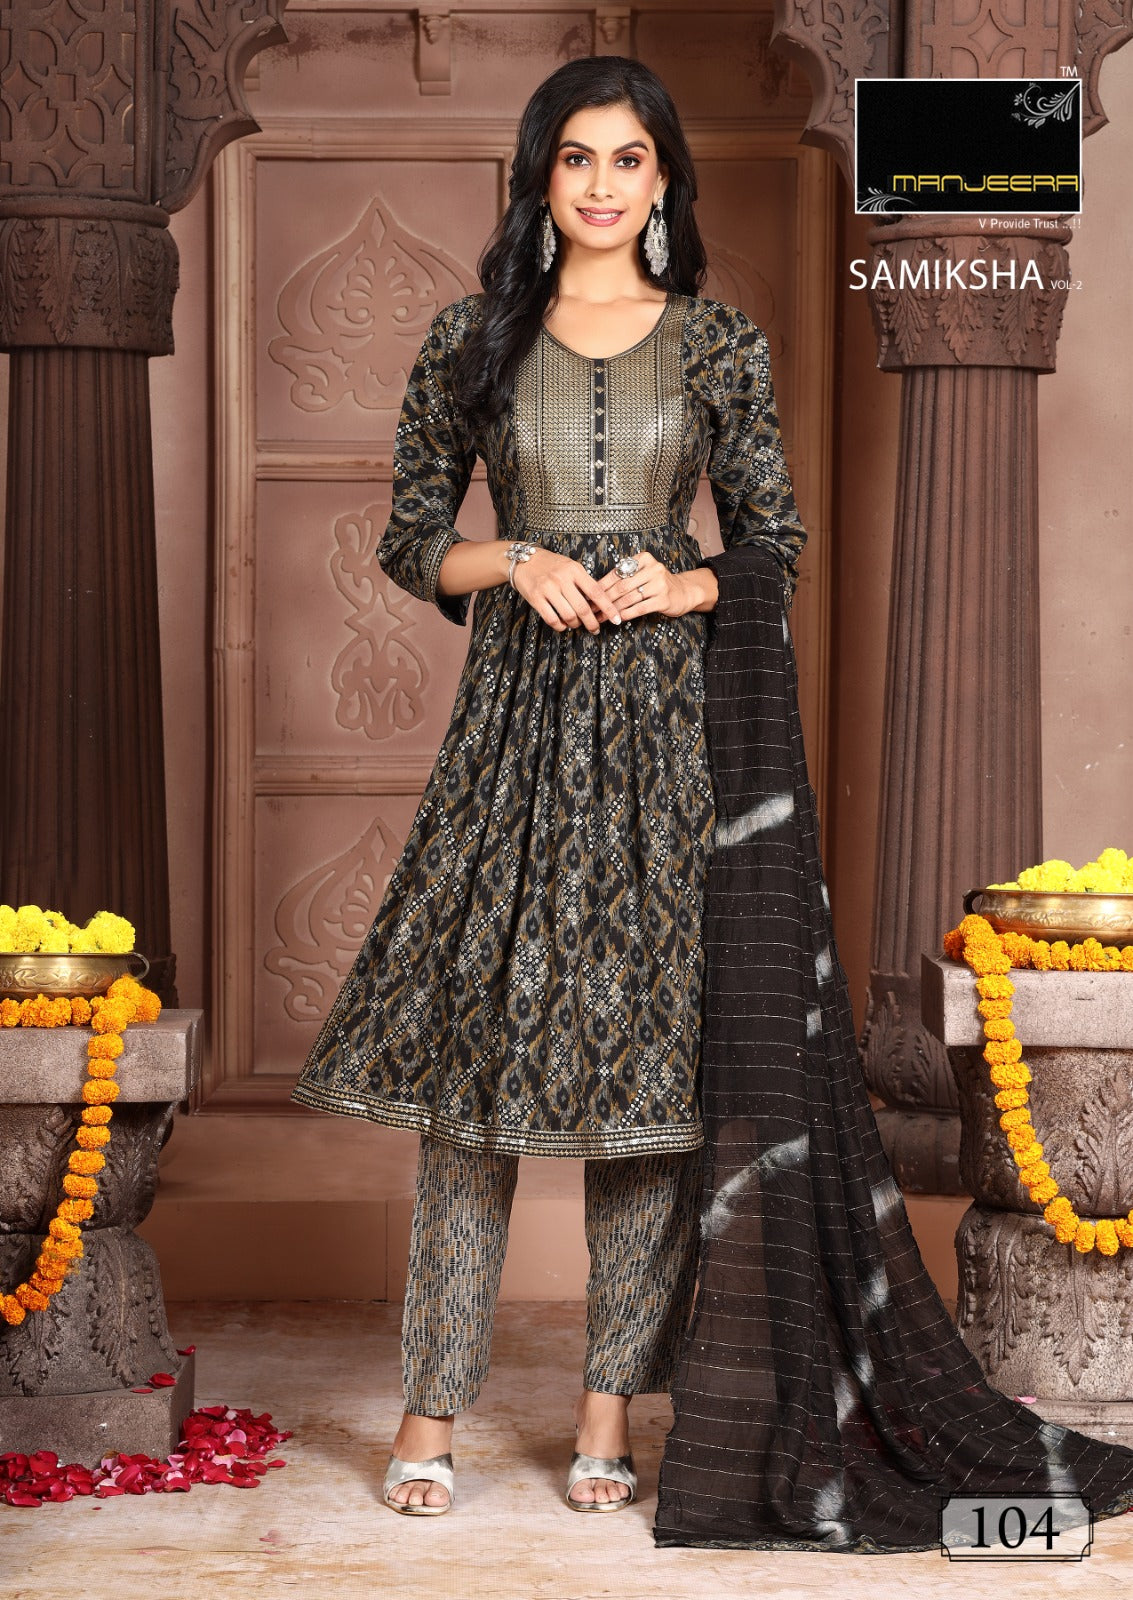 Samiksha Vol 2 Manjeera Fancy Readymade Pant Style Suits